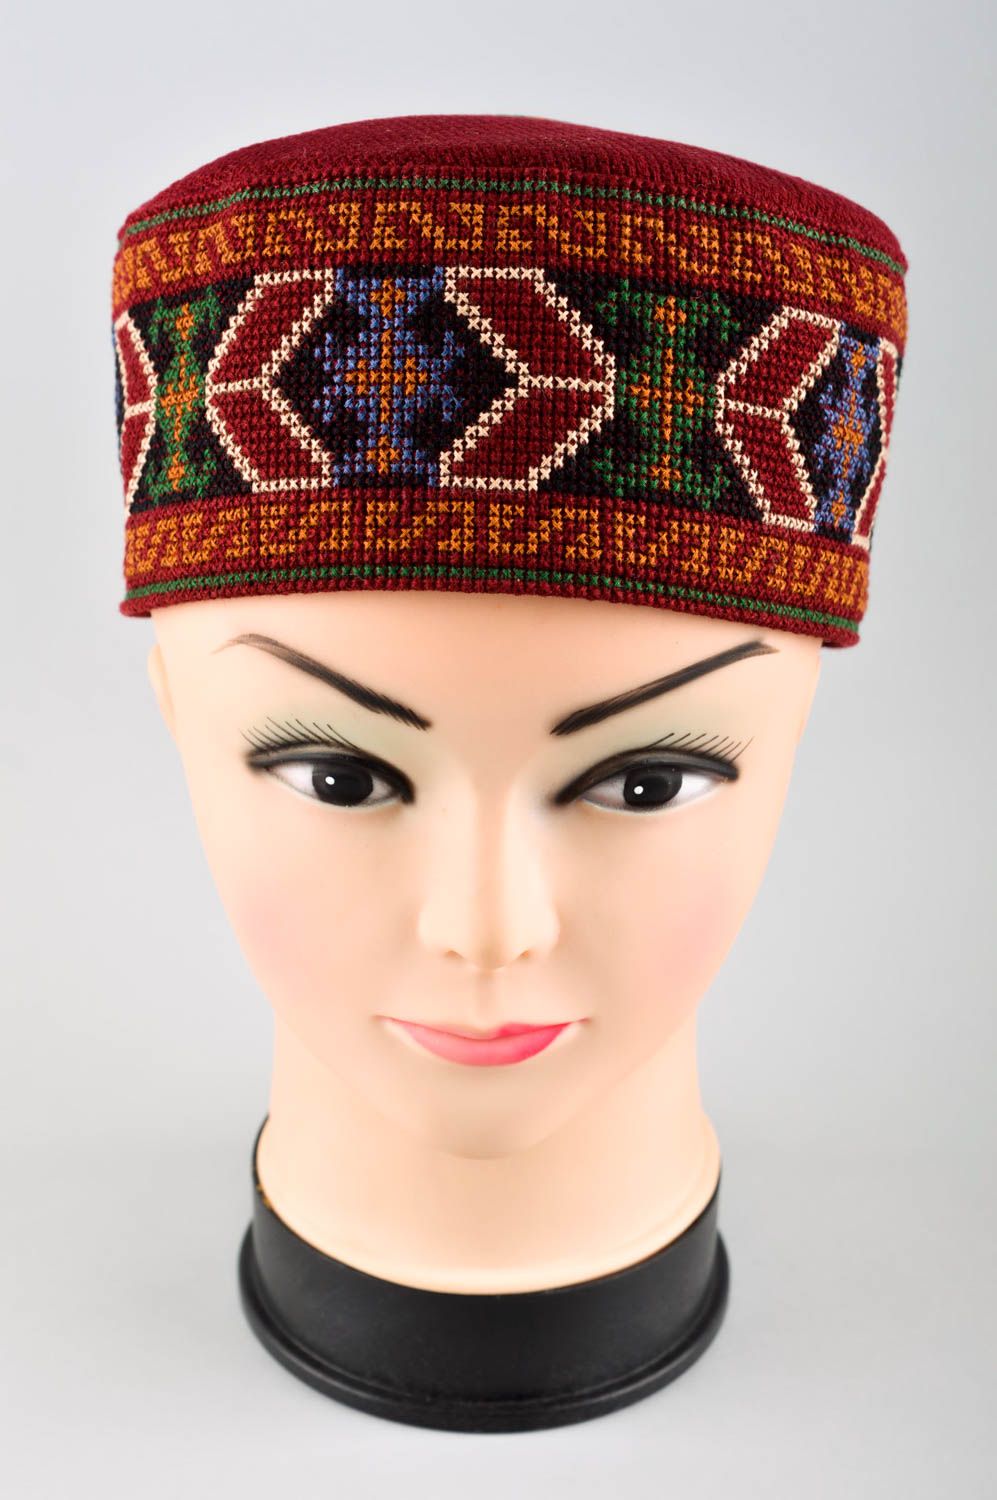 Handmade mens hat textile hat design warm headwear ideas fashion accessories photo 2